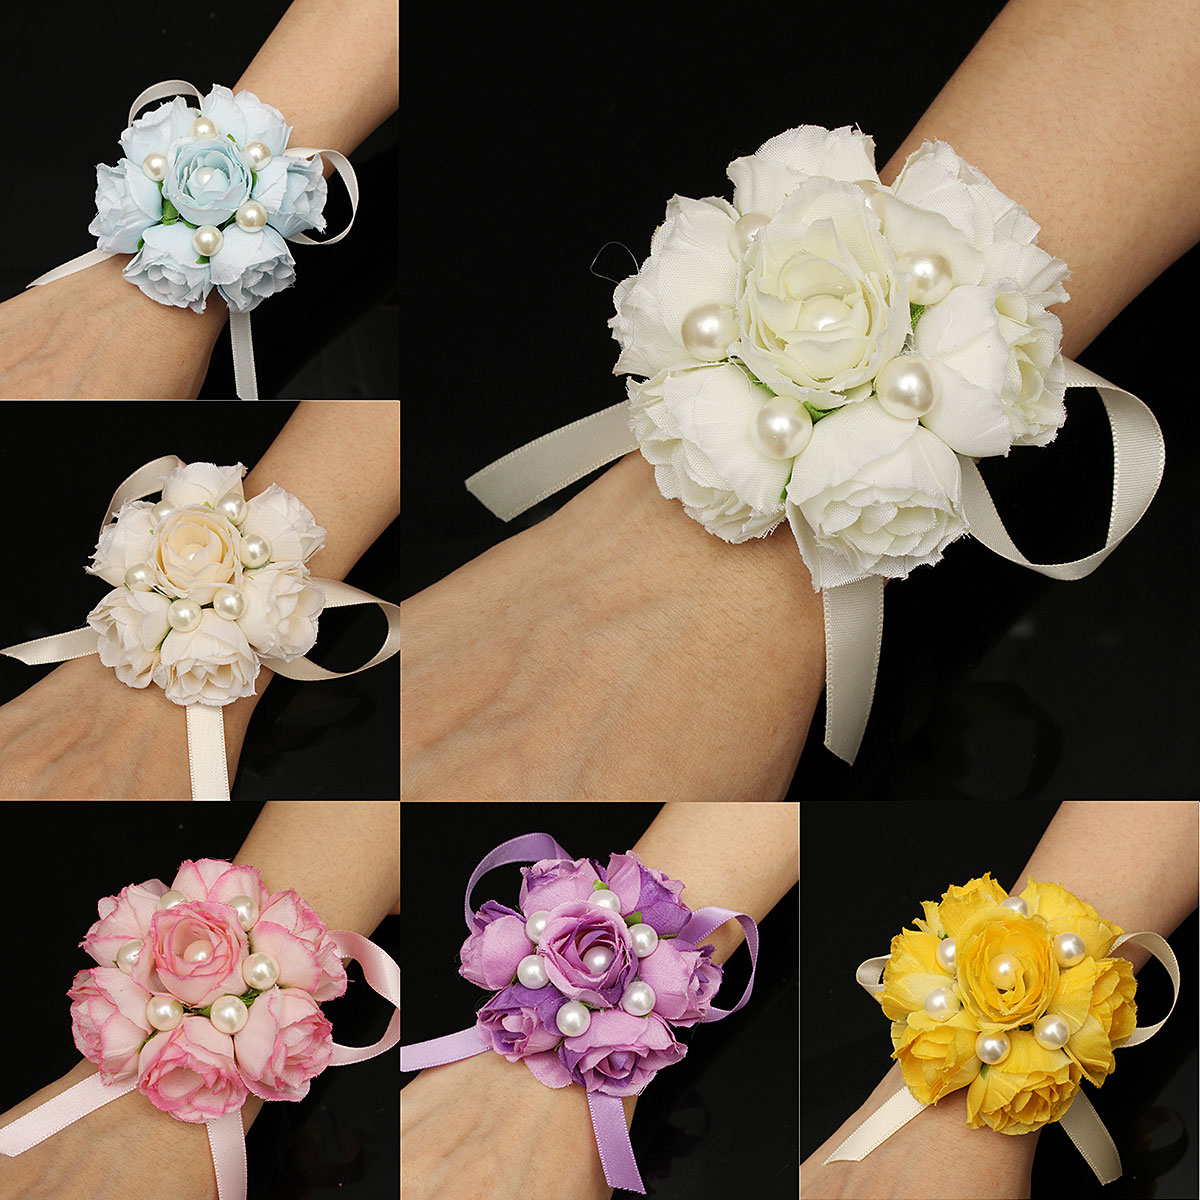 Bridemaid-Silk-Rose-Flower-Pearl-Bracelet-Wrist-Corsage-Wedding-Party-Bridal-Accessories-1047592